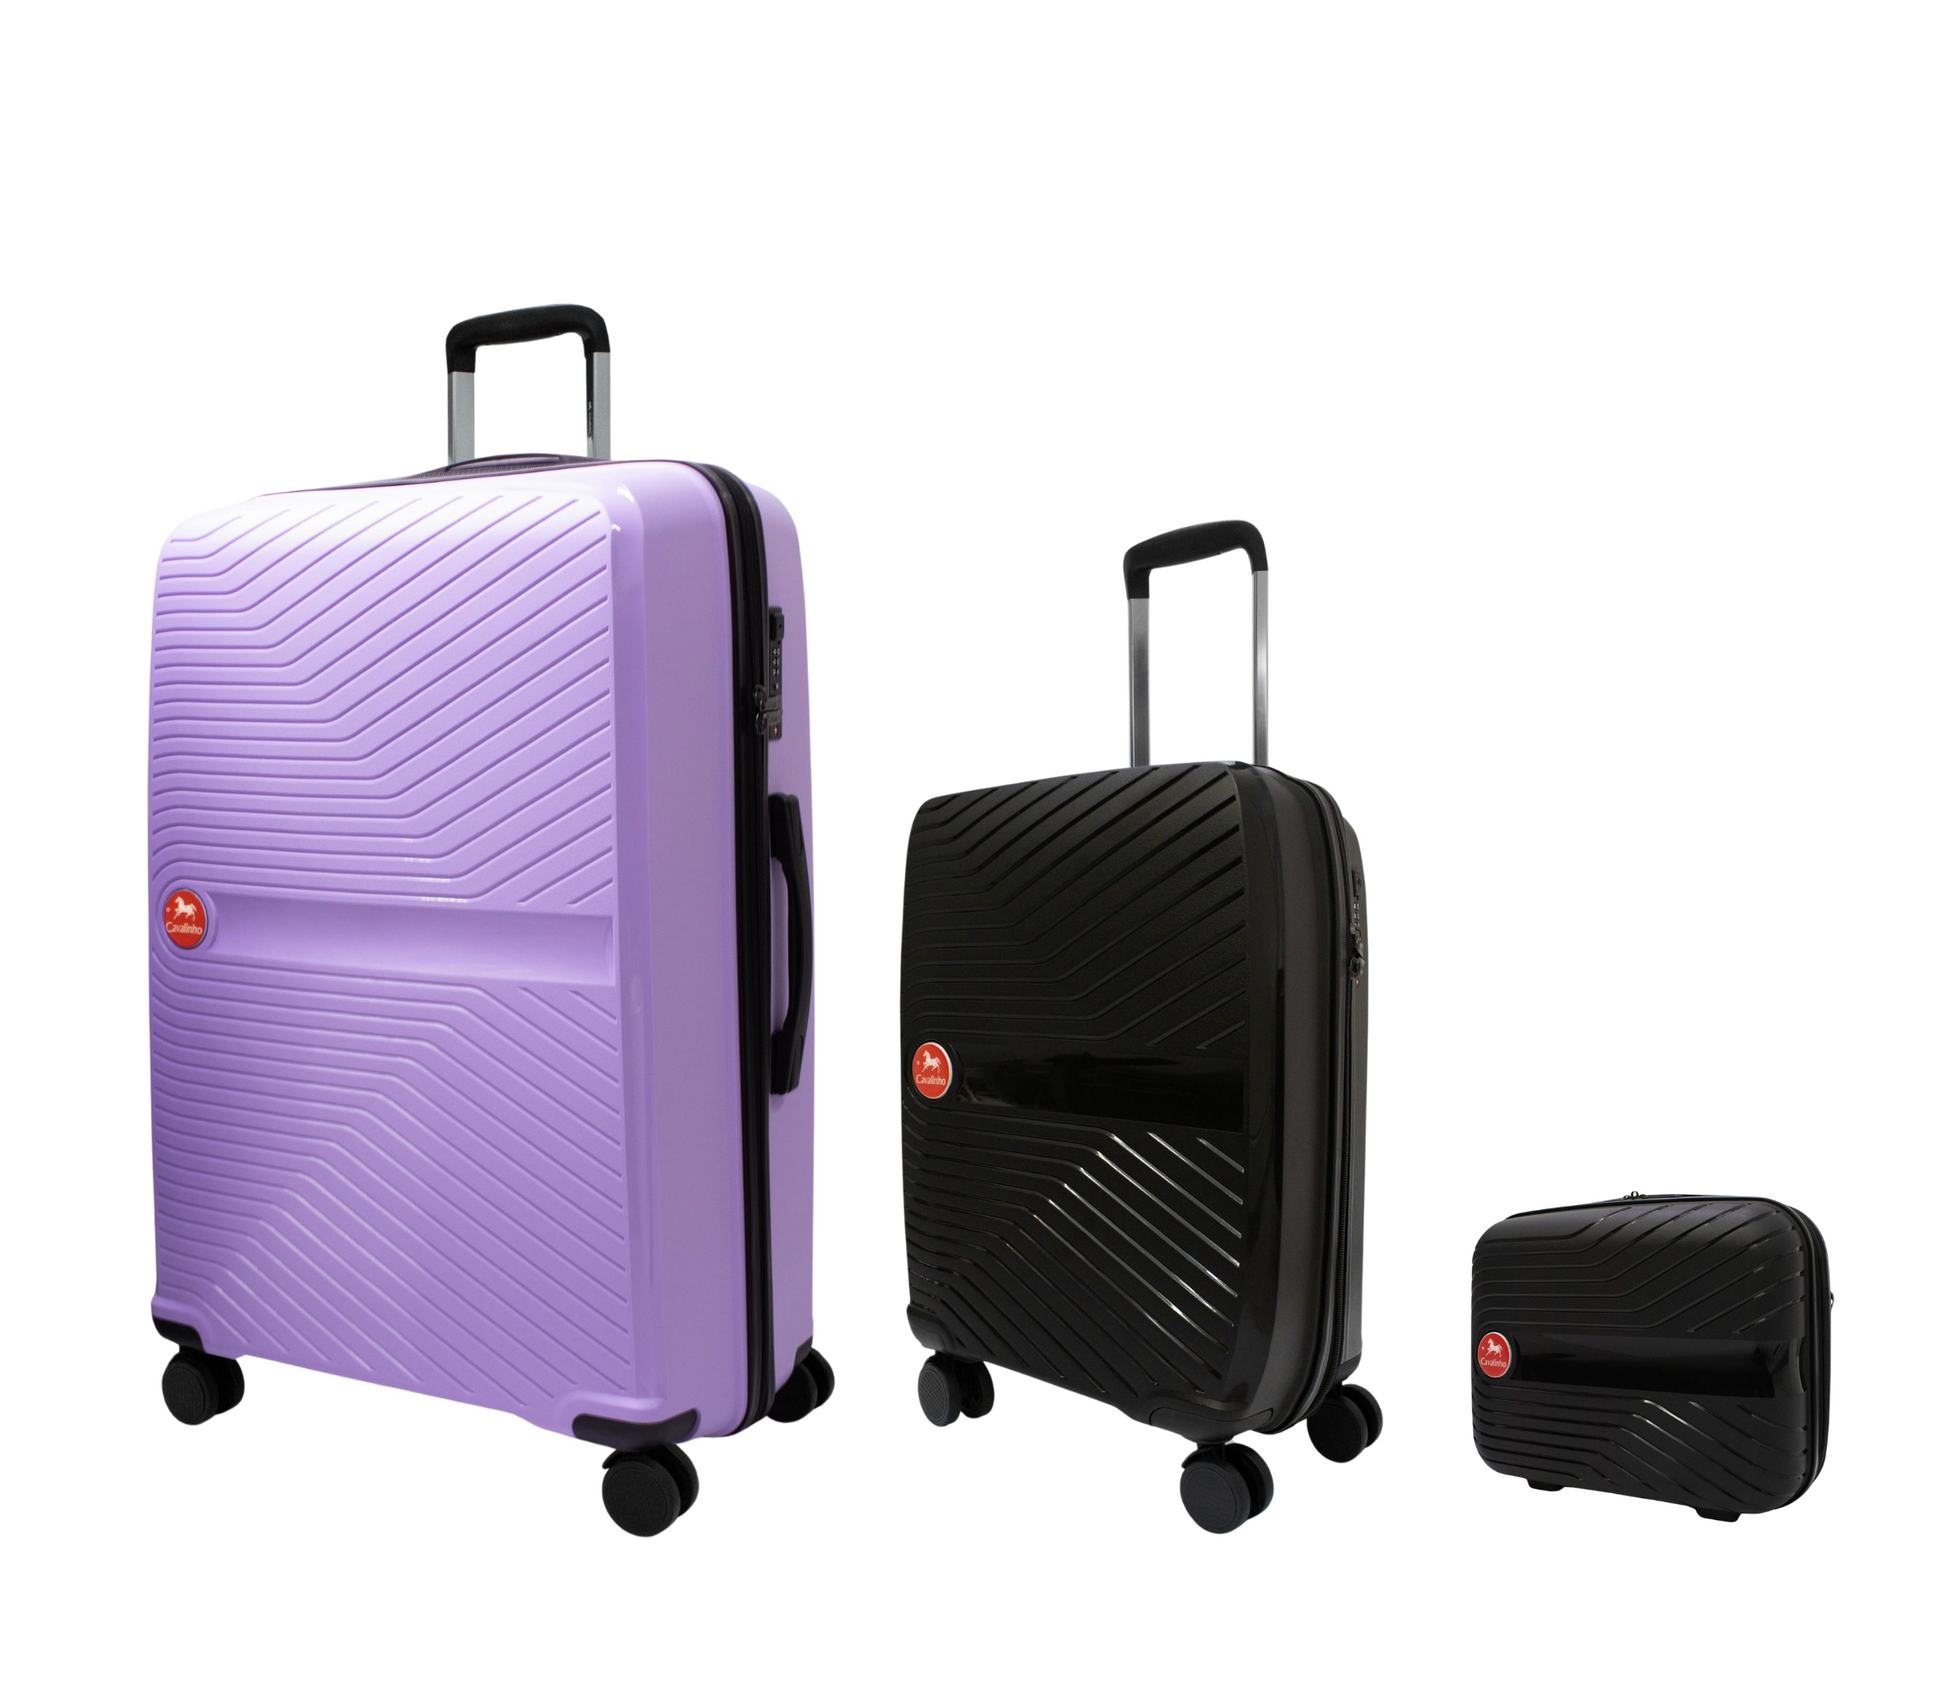 Cavalinho Colorful 3 Piece Luggage Set (15", 19" & 28") - Black Black Lilac - 68020004.010139.S151928._2